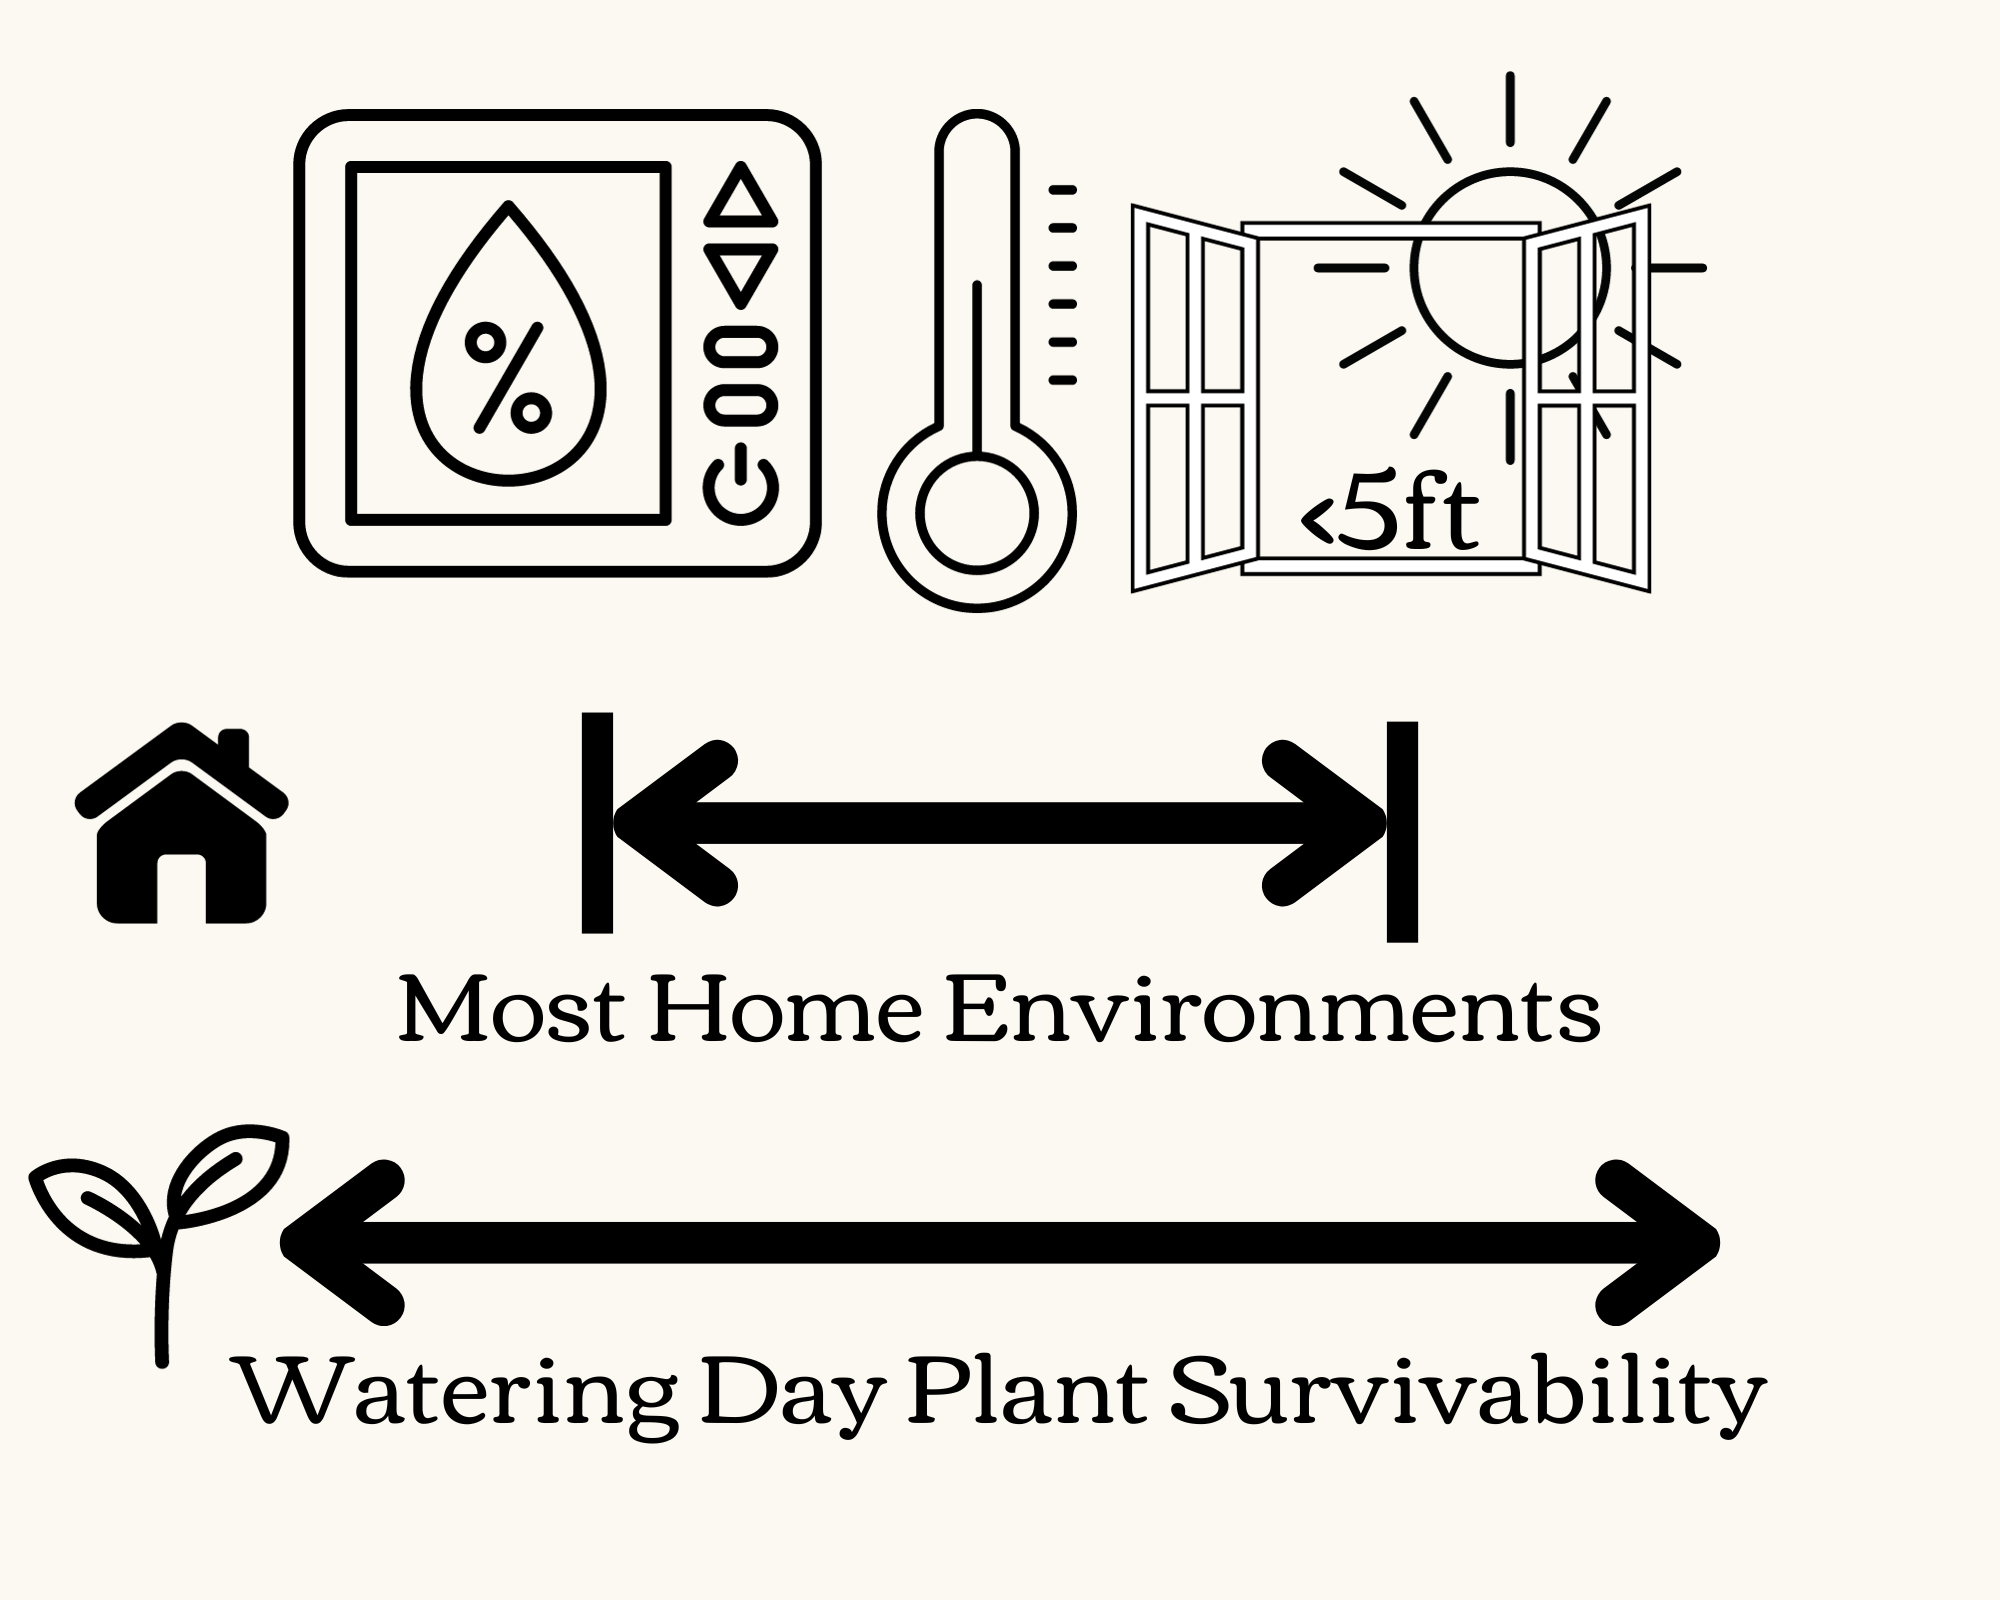 Watering Day™ System Starter Kit - Bamboo Fiber